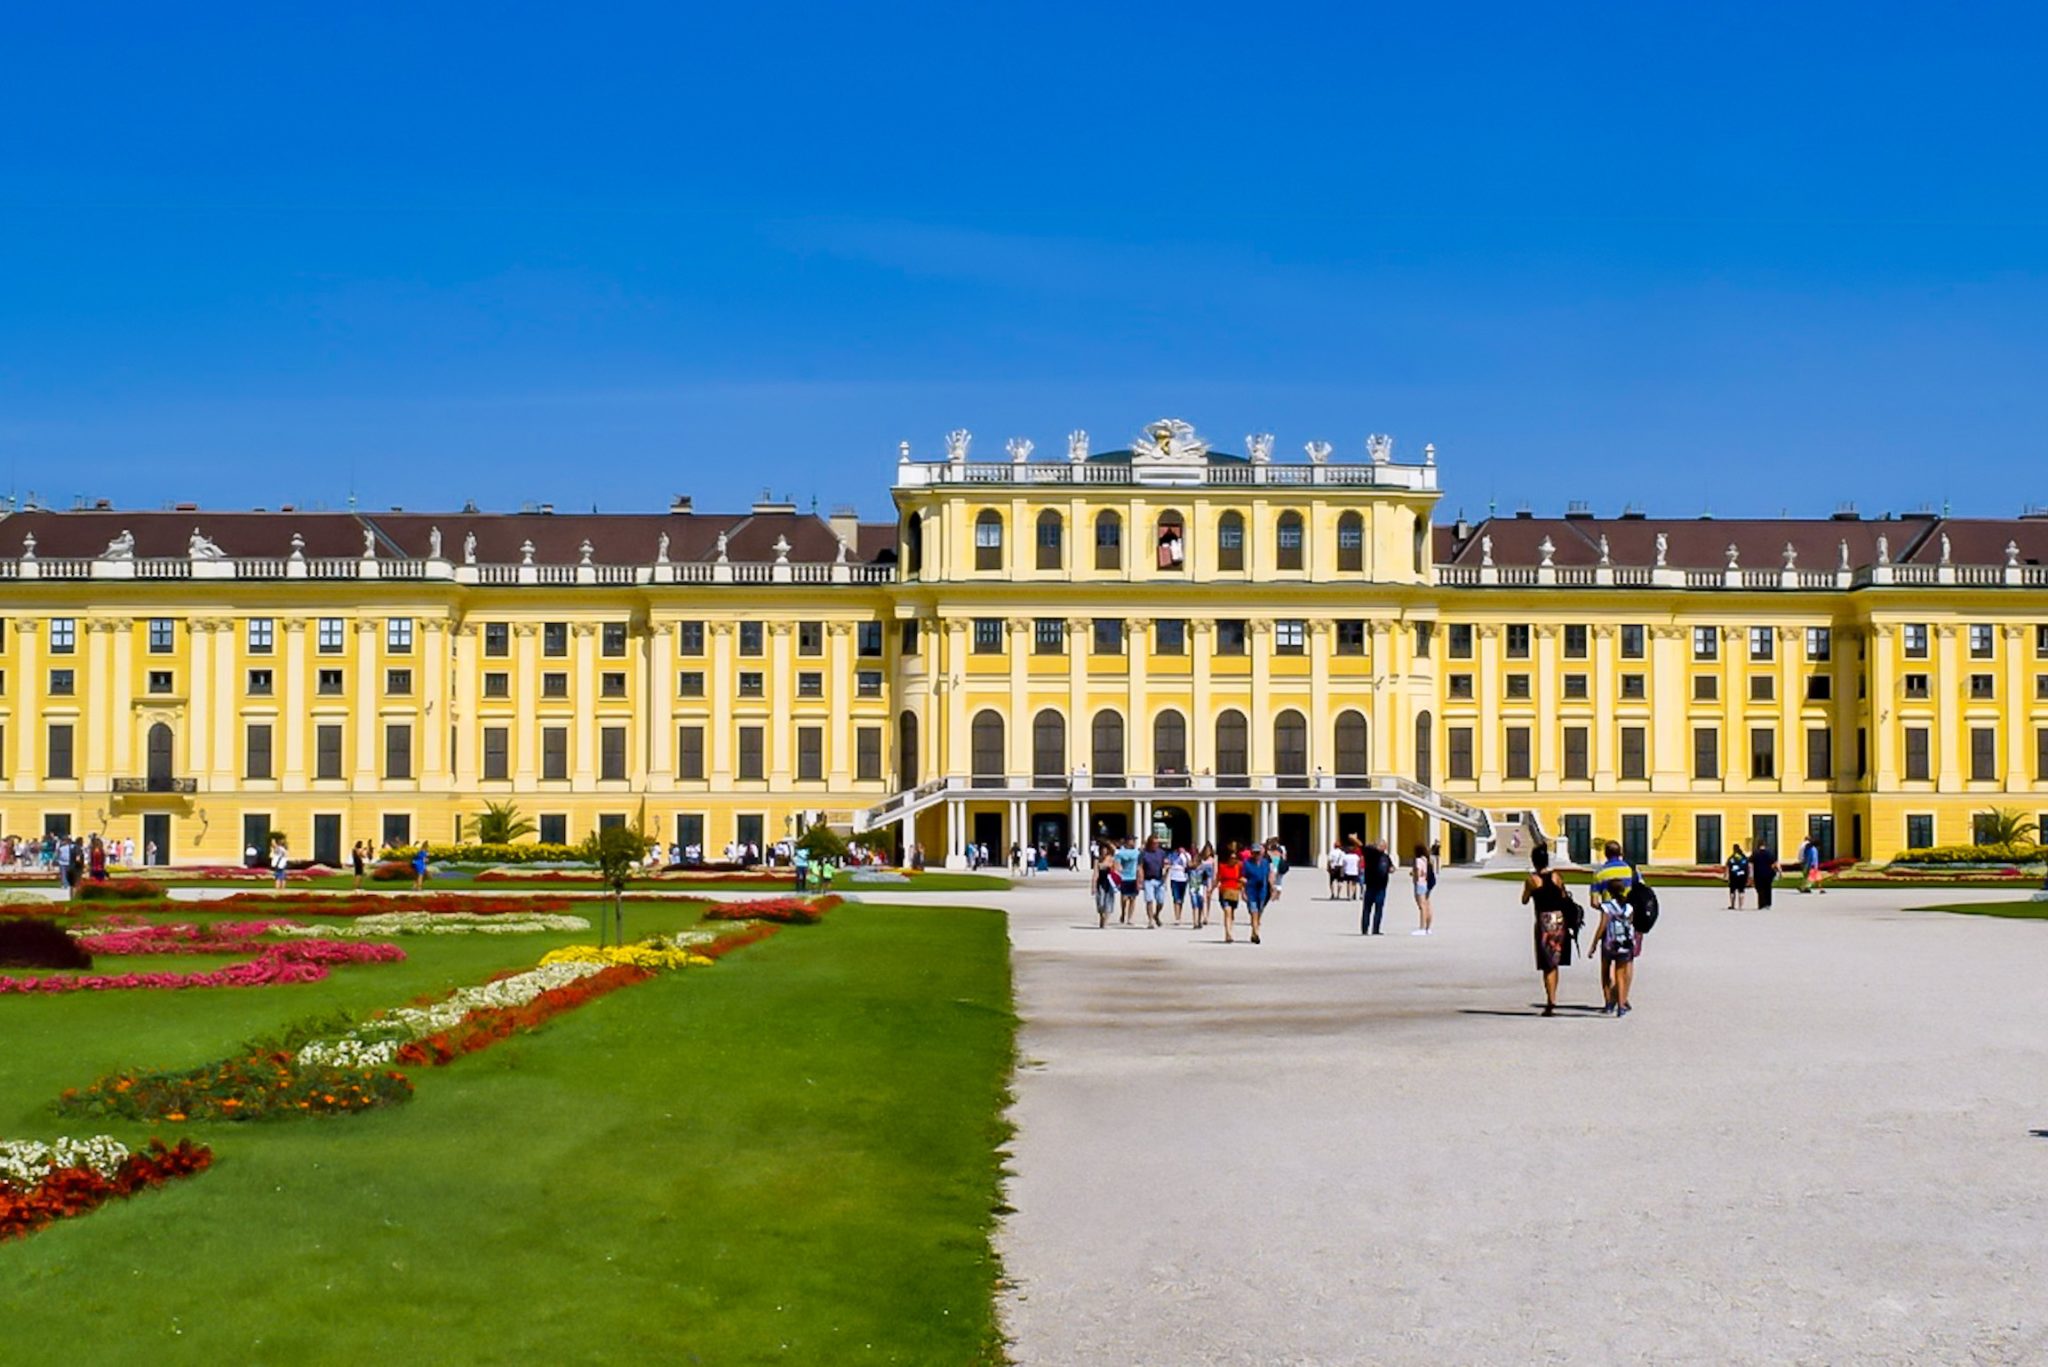 Vienna Schönbrunn Palace and Zoo